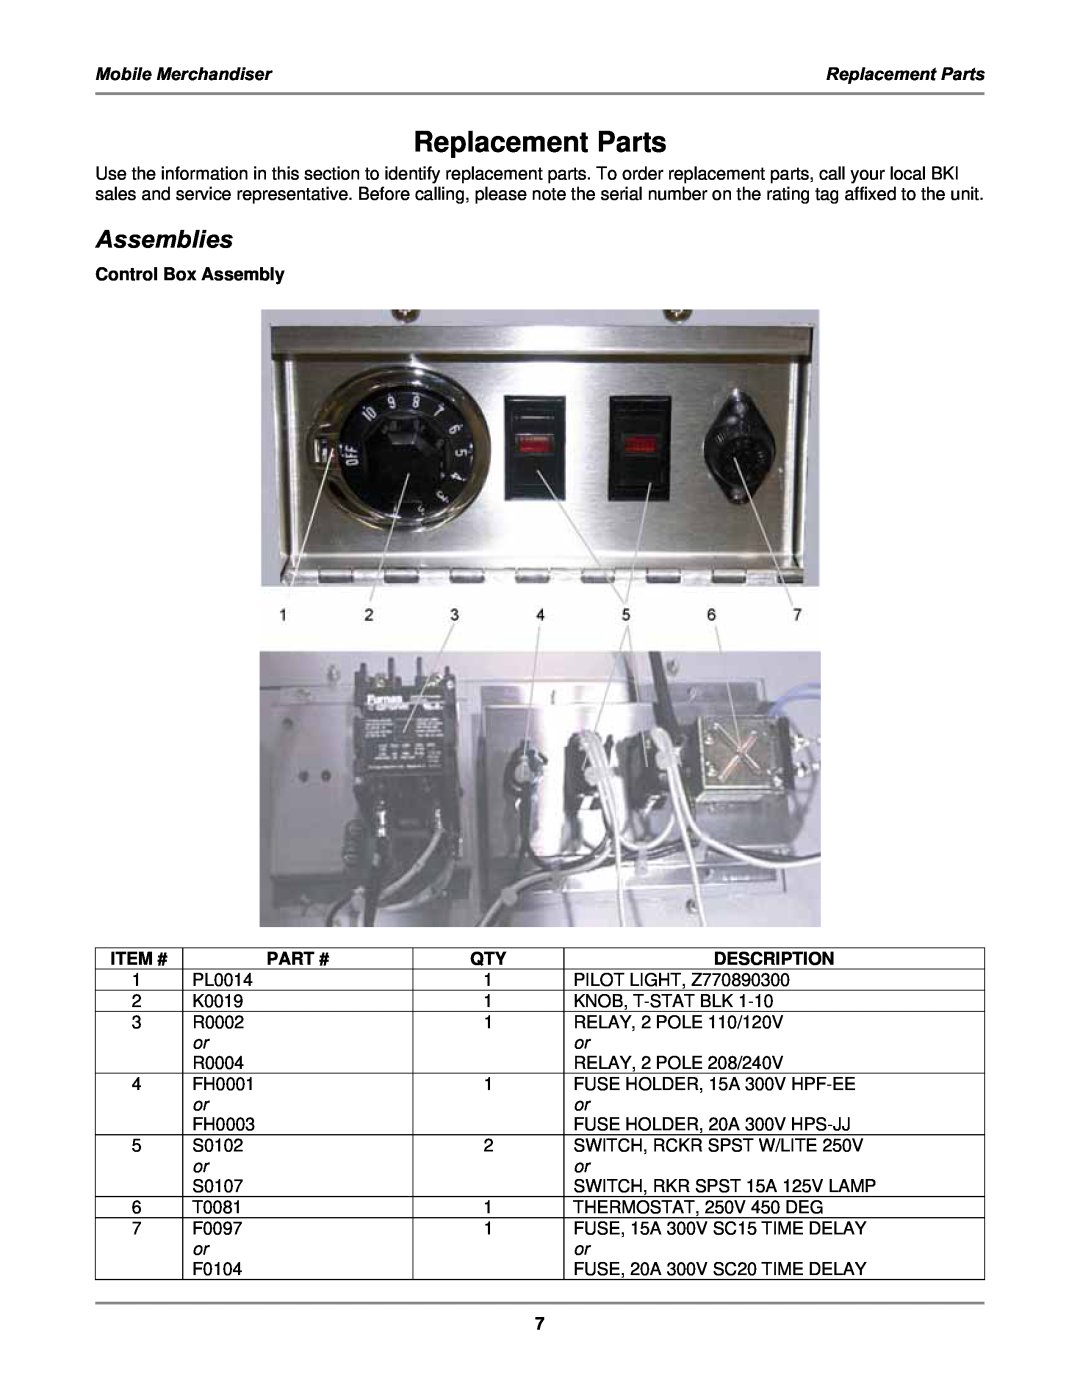 Bakers Pride Oven MM6, MM4 service manual Replacement Parts, Assemblies, Control Box Assembly, Item #, Part #, Description 